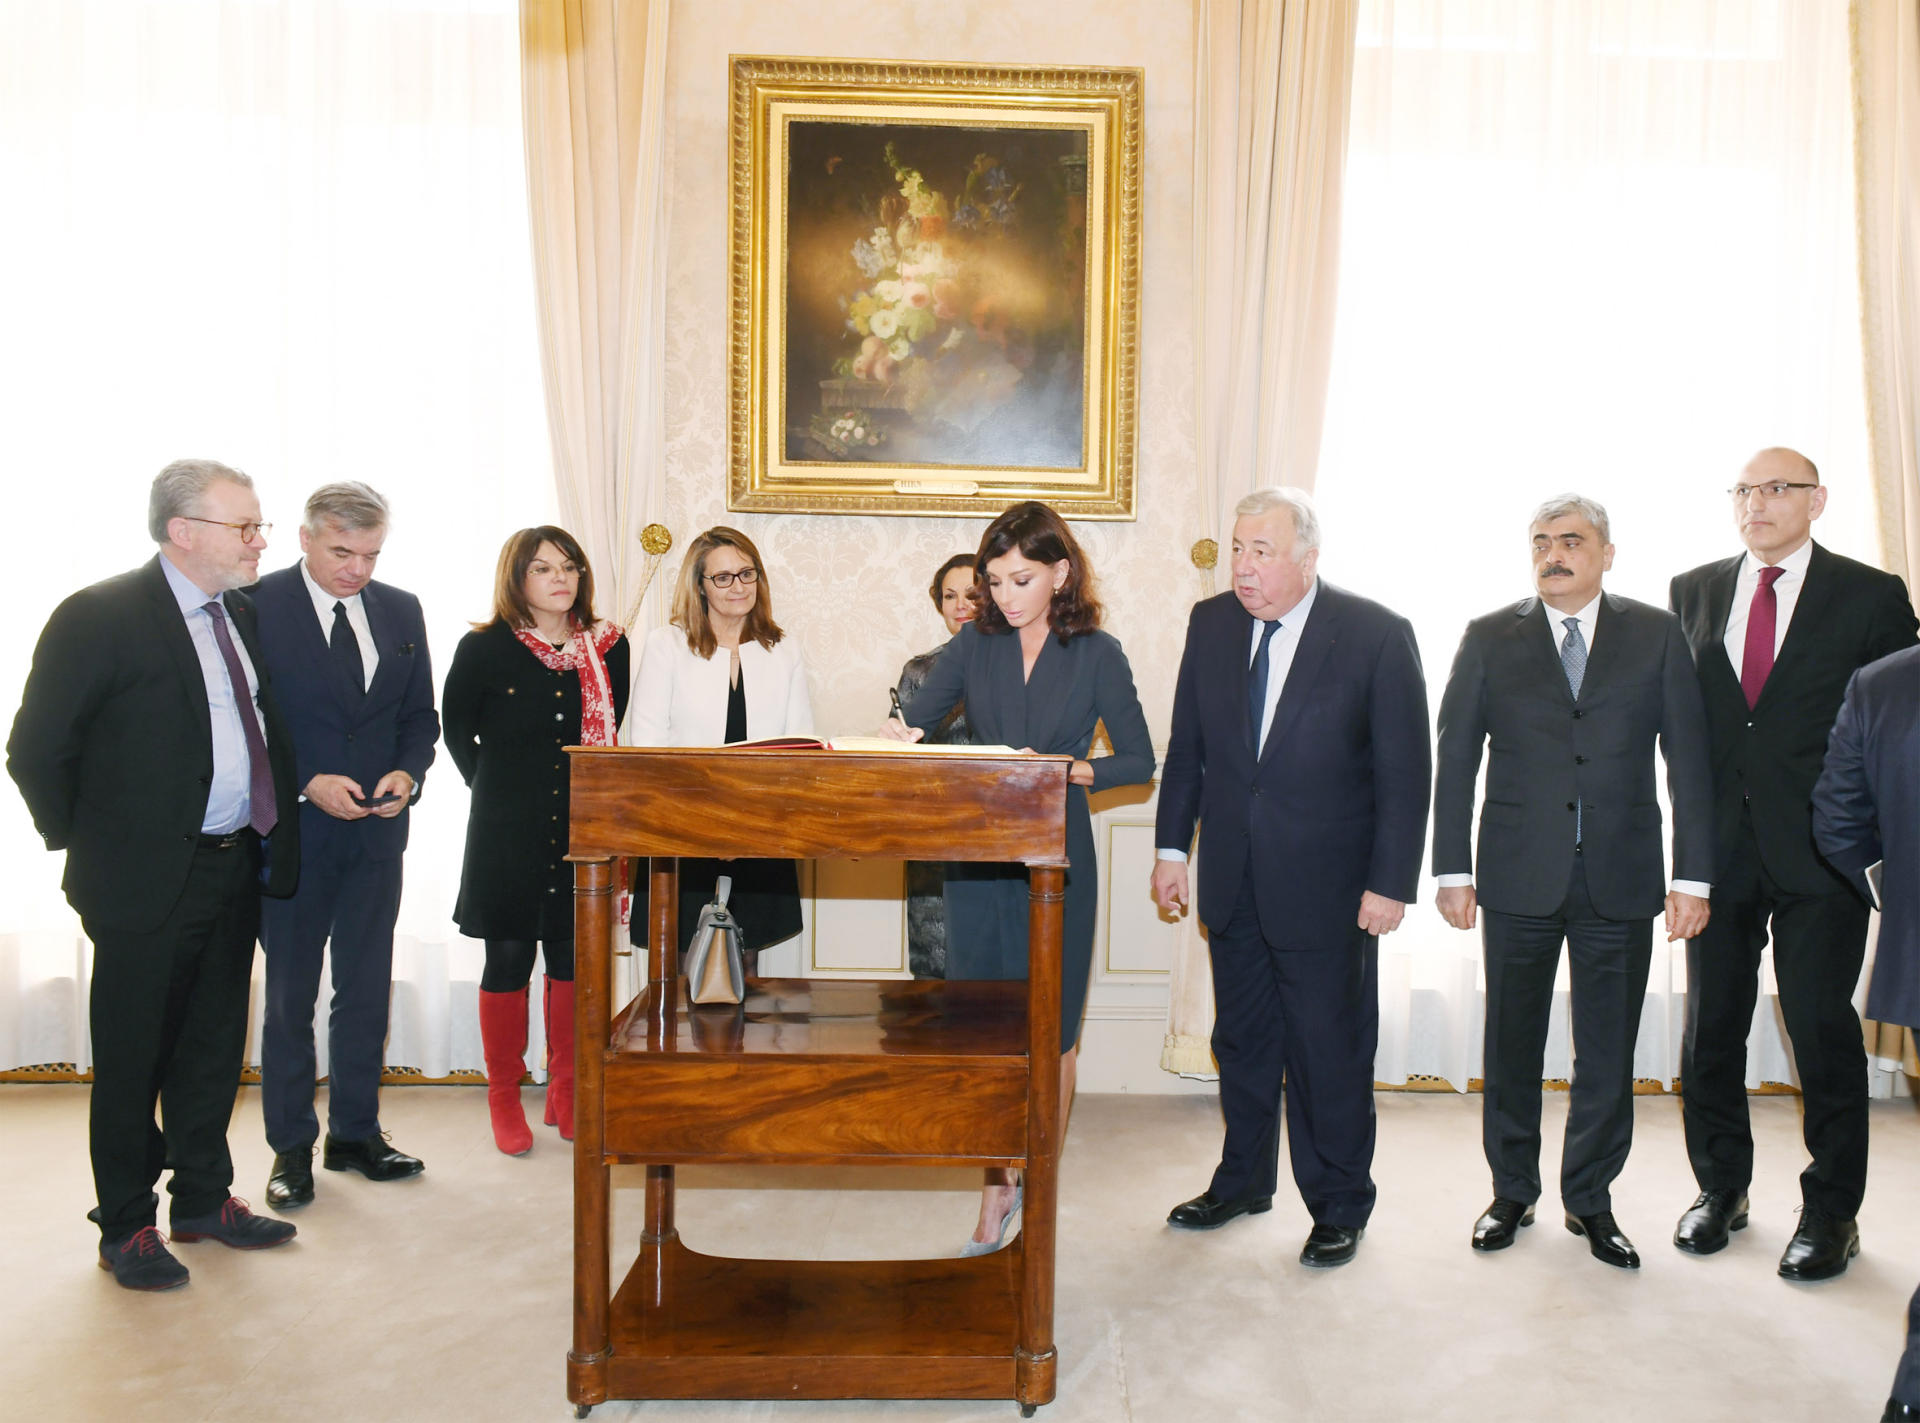 First Vice-President of Azerbaijan Mehriban Aliyeva meets President of French Senate Gerard Larcher (PHOTO)